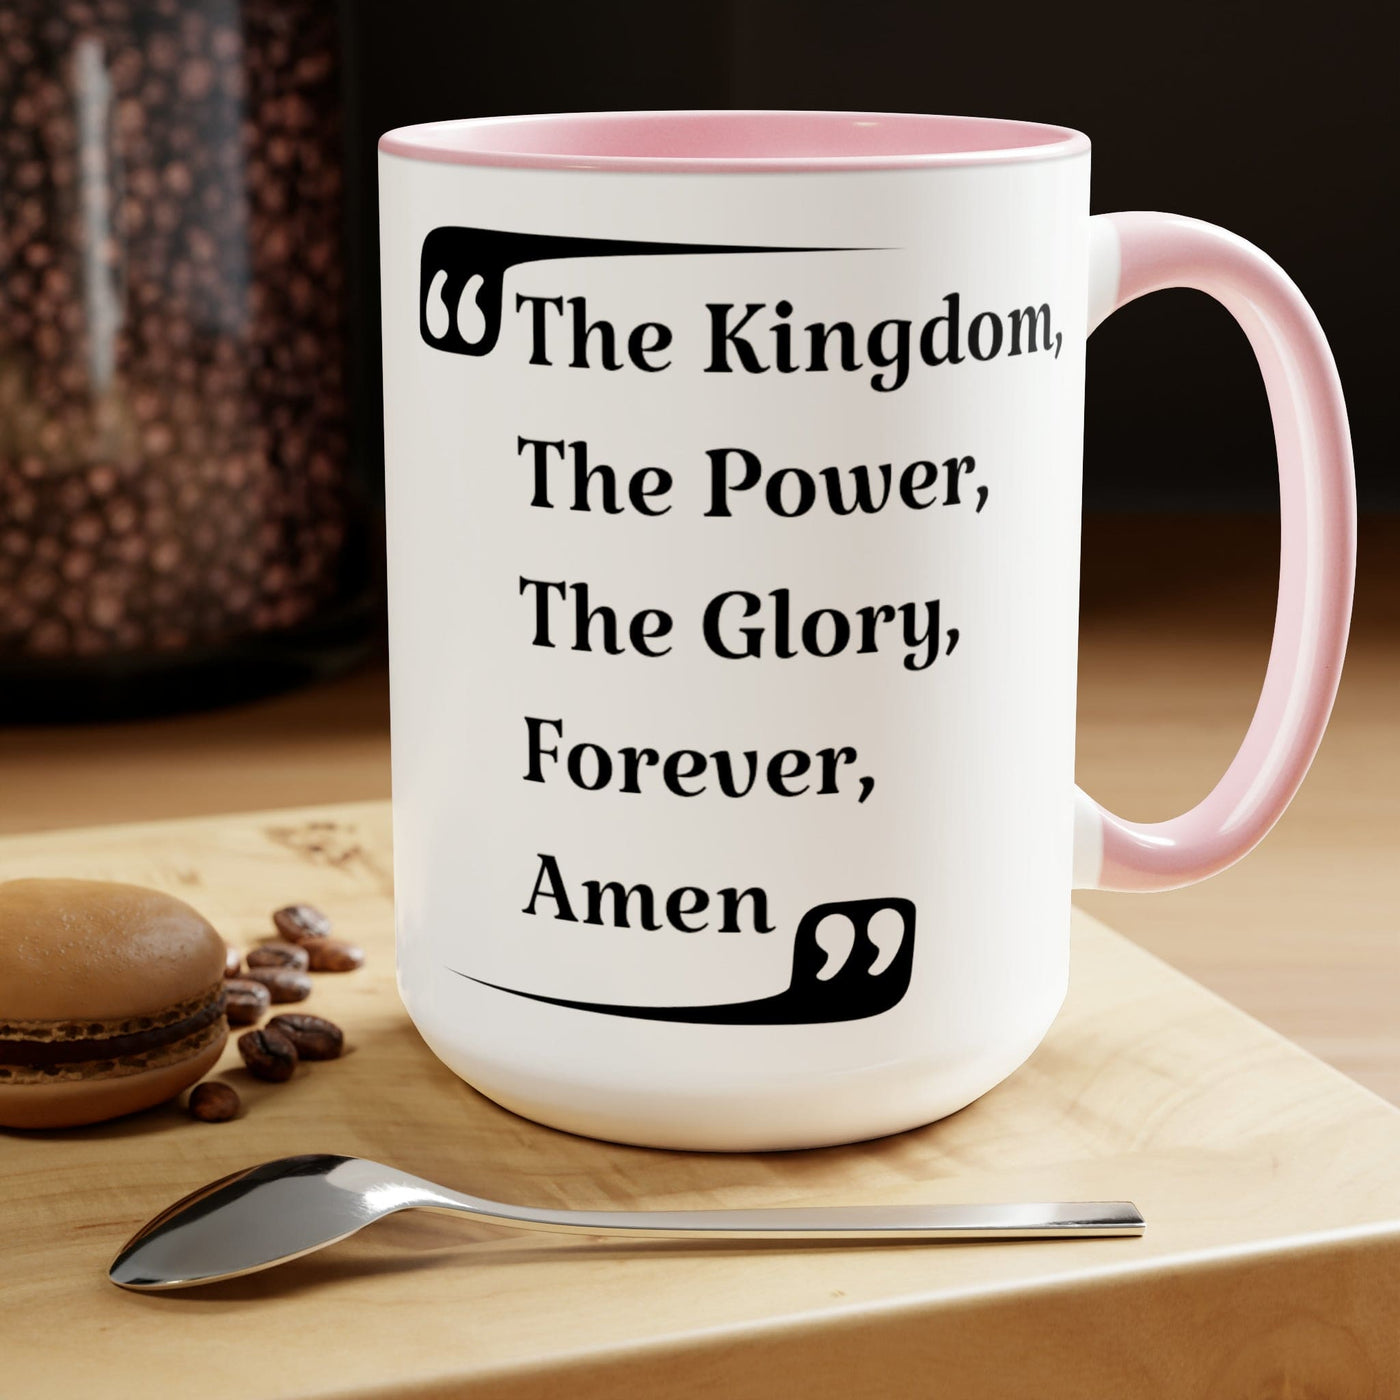 Accent Ceramic Coffee Mug 15oz - The Kingdom The Power The Glory Forever Amen